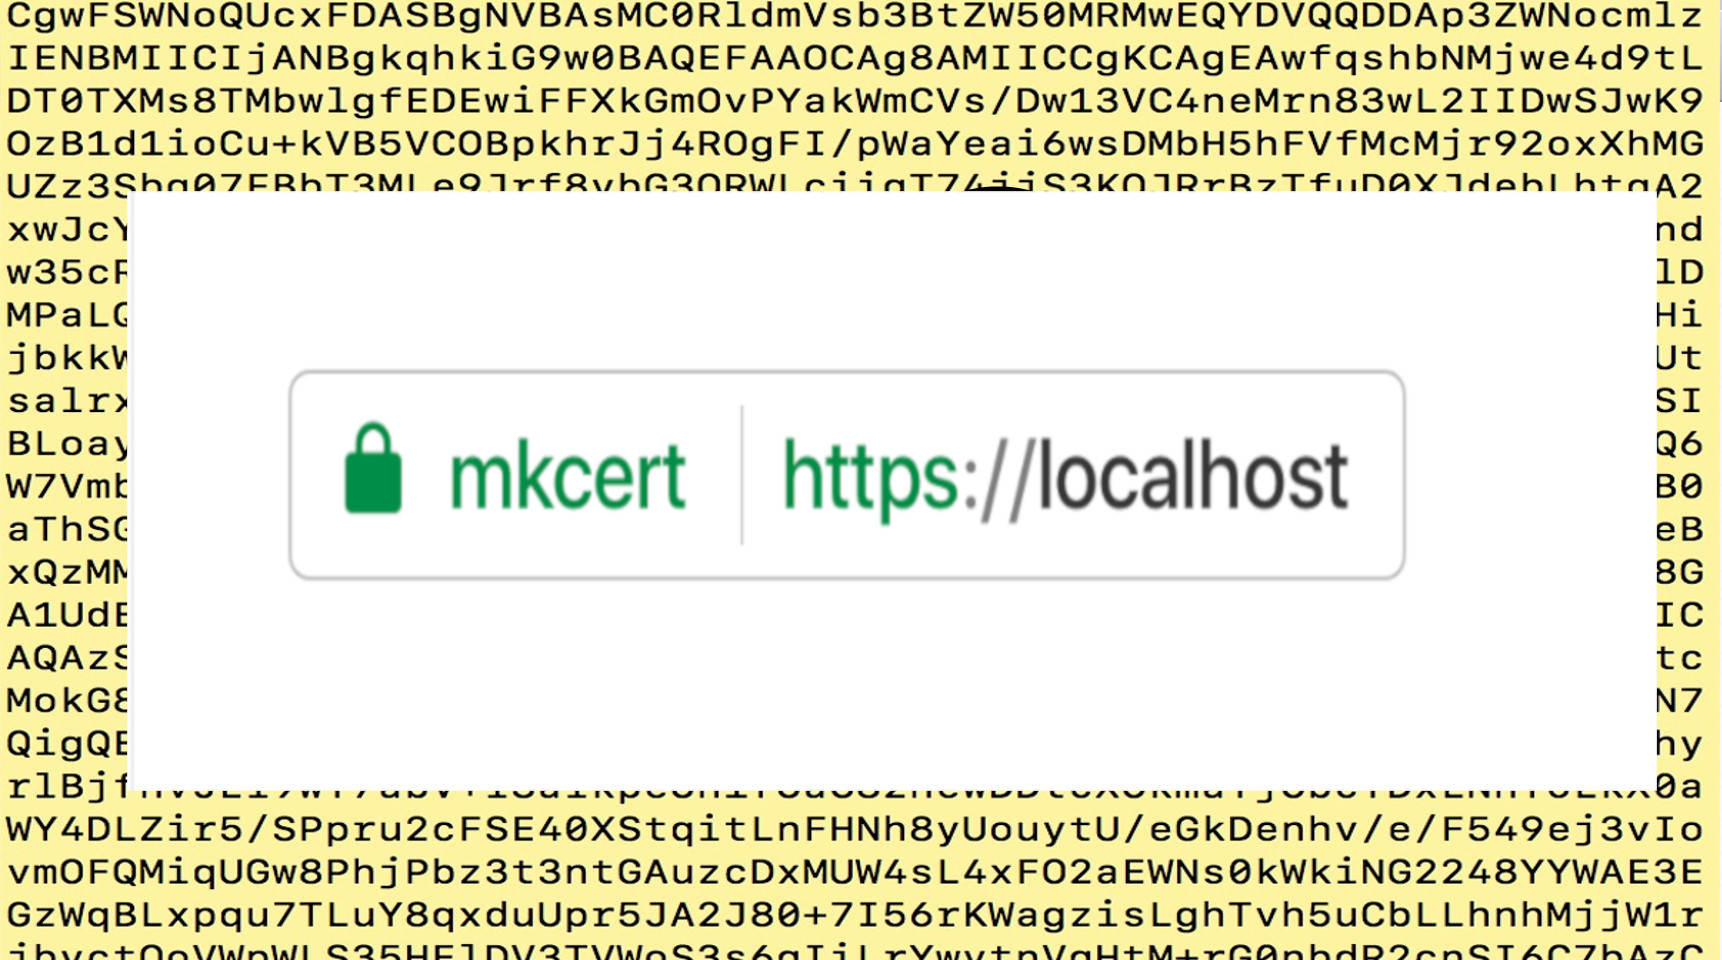 Mkcert - Create SSL Certificates for Local Development